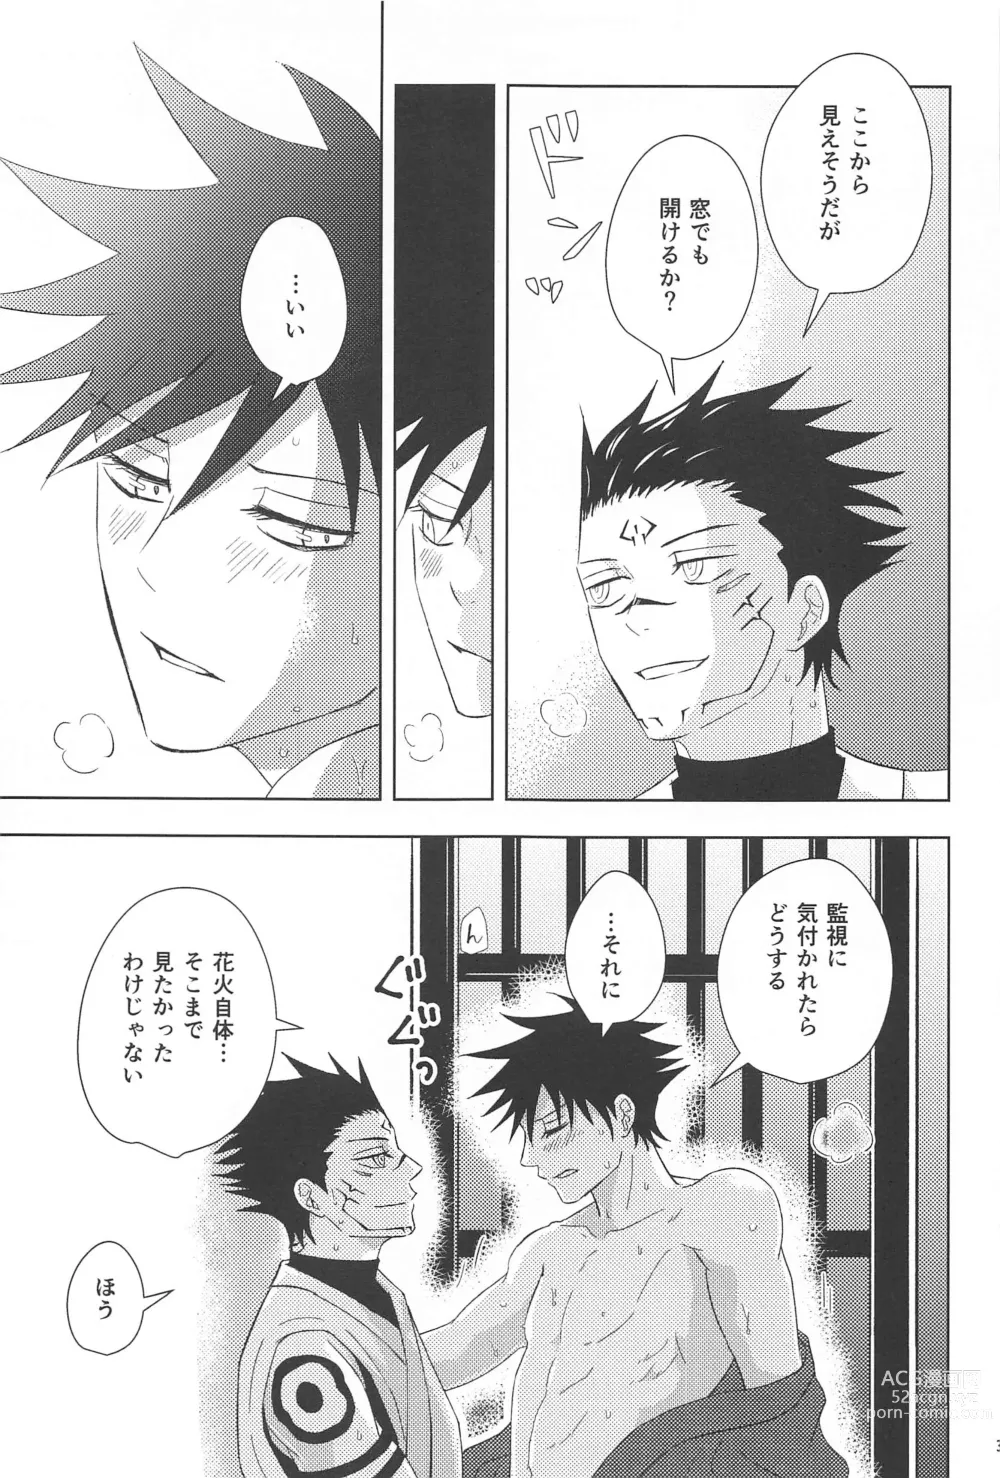 Page 35 of doujinshi Kakurega nite